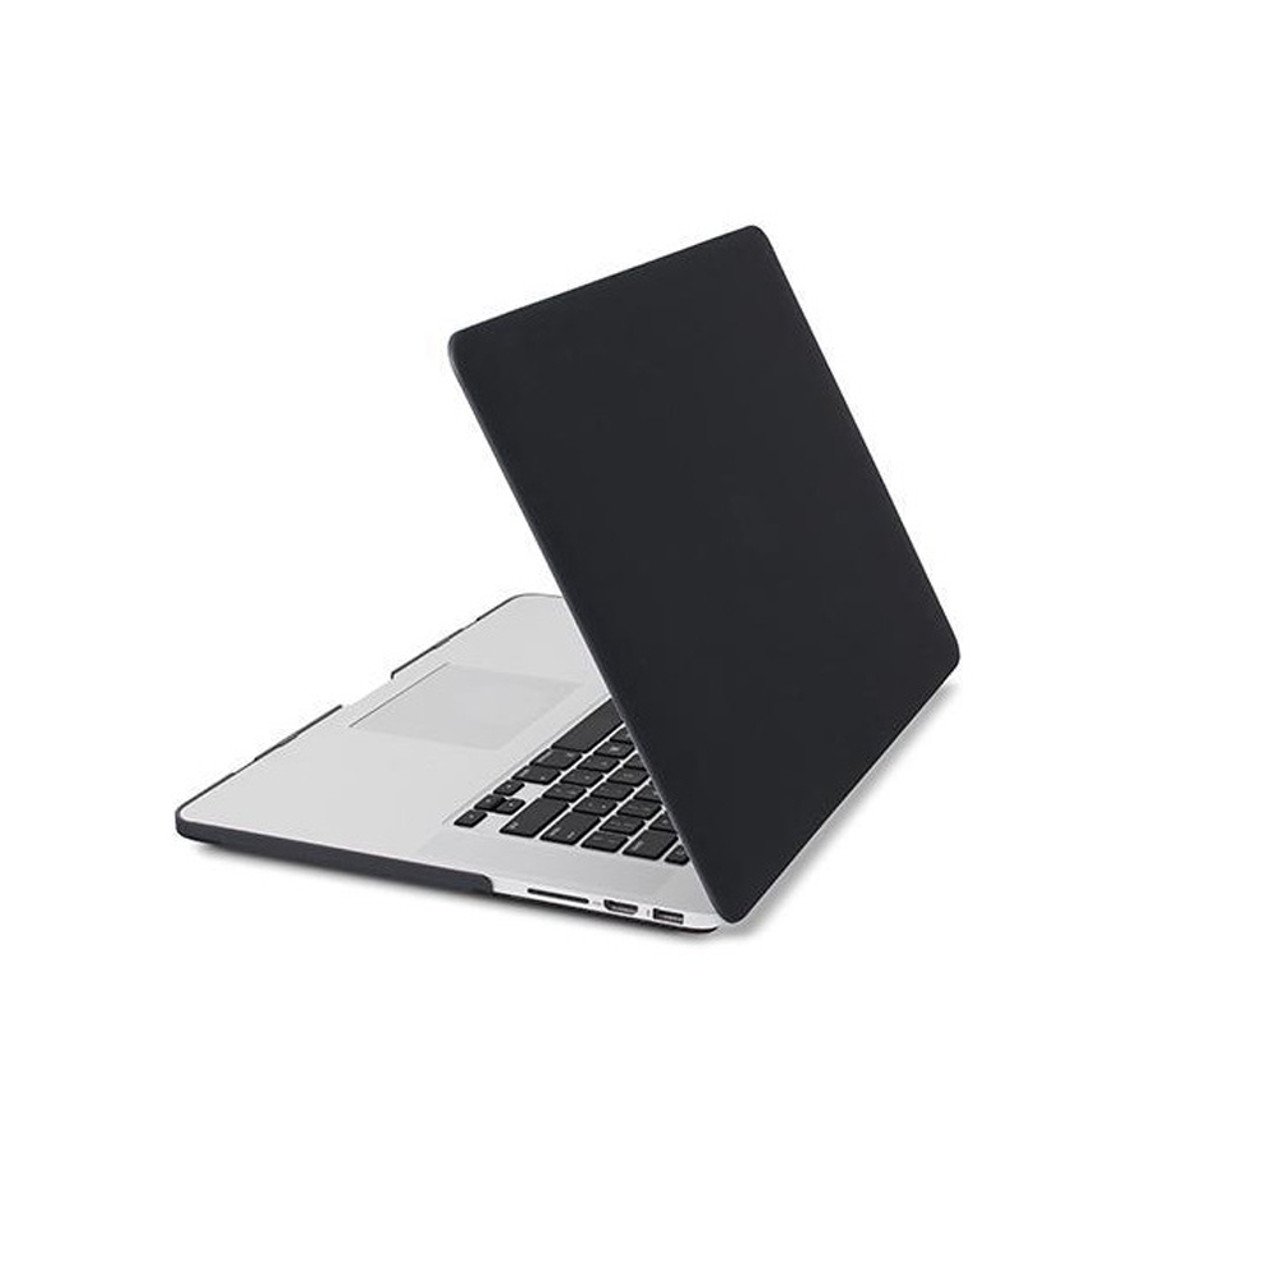 Apple® MacBook Pro 13.3” Intel Core i5, 4GB RAM, 500GB HDD + Black Case product image